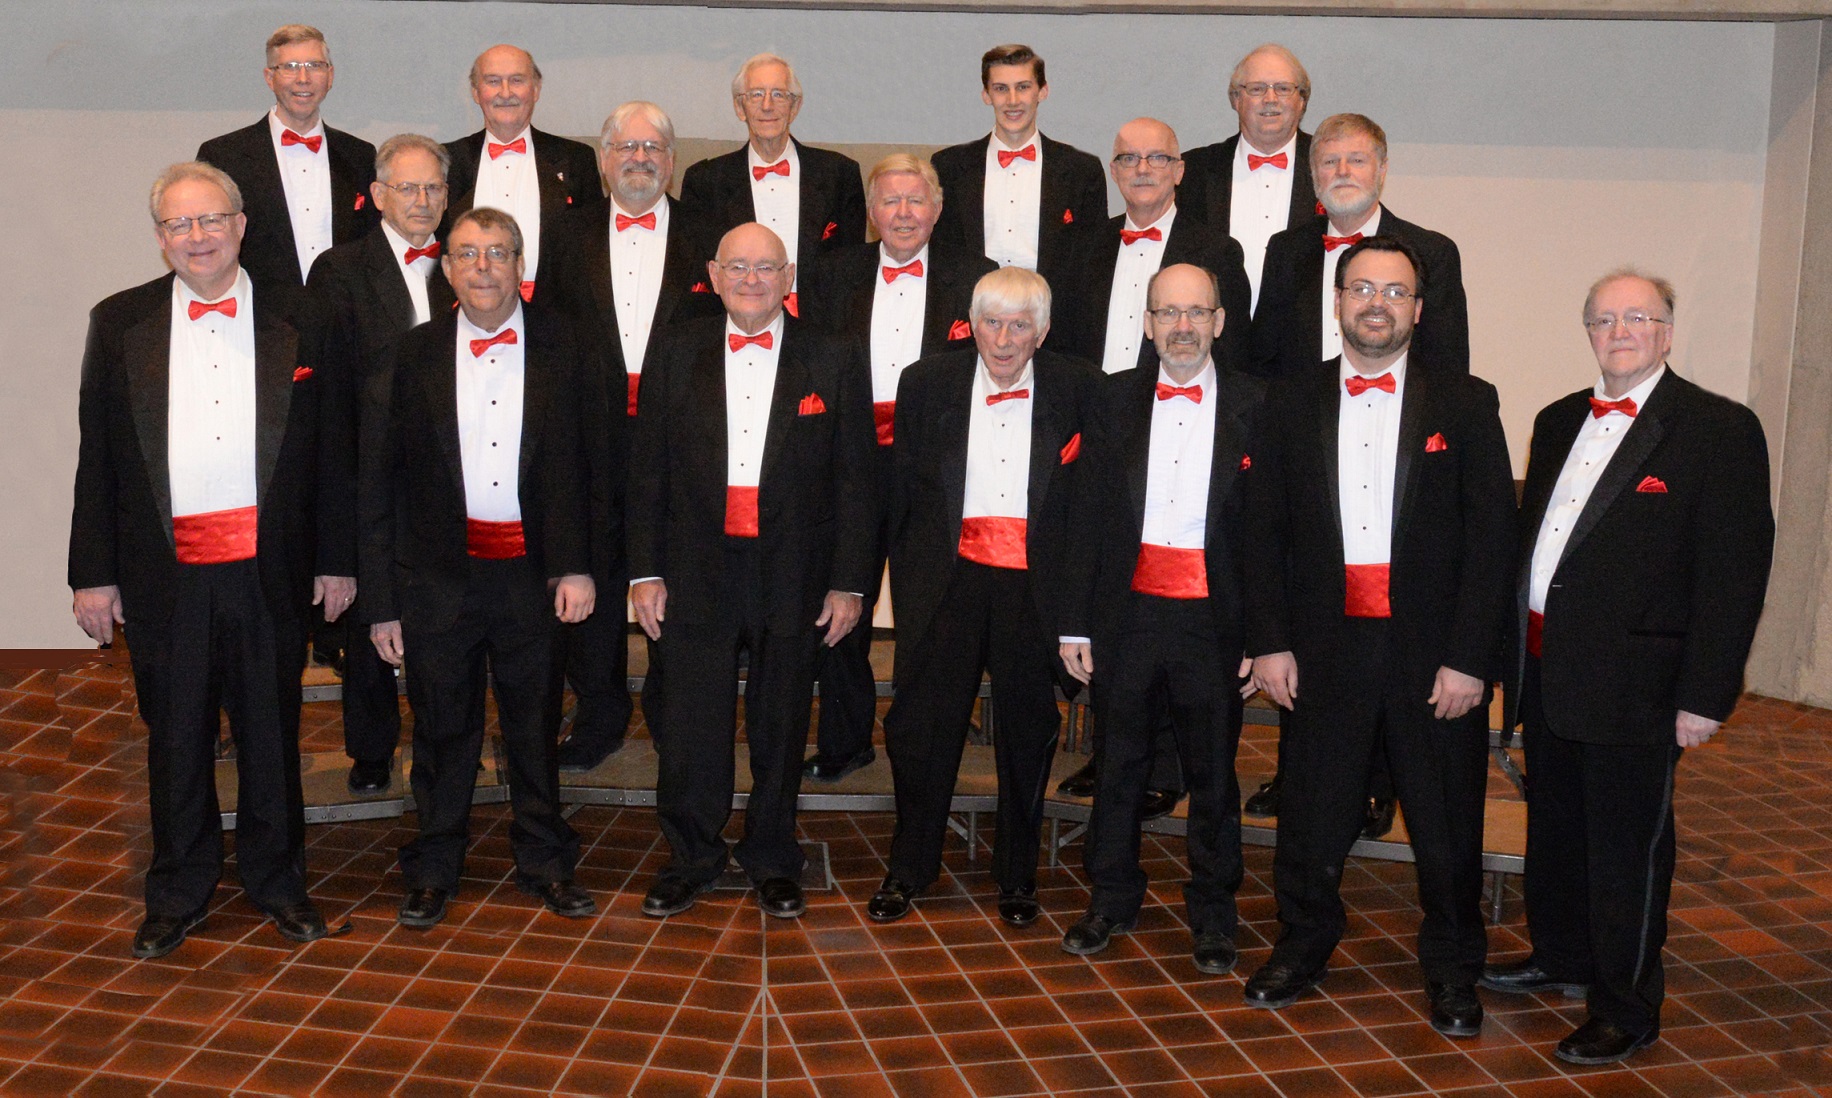 Rochester Male Chorus